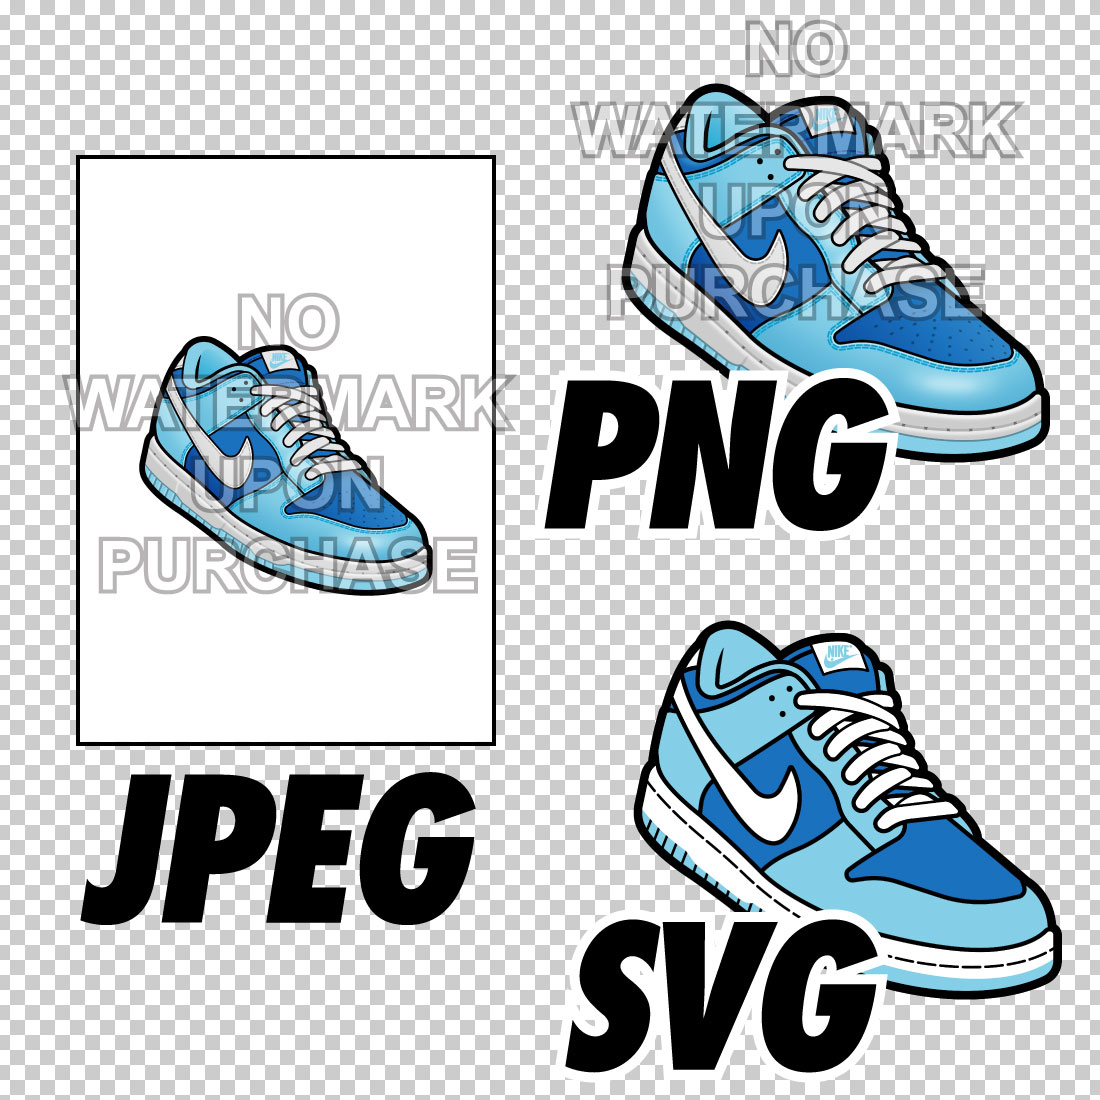 Dunk Low Argon JPEG PNG SVG digital download preview image.